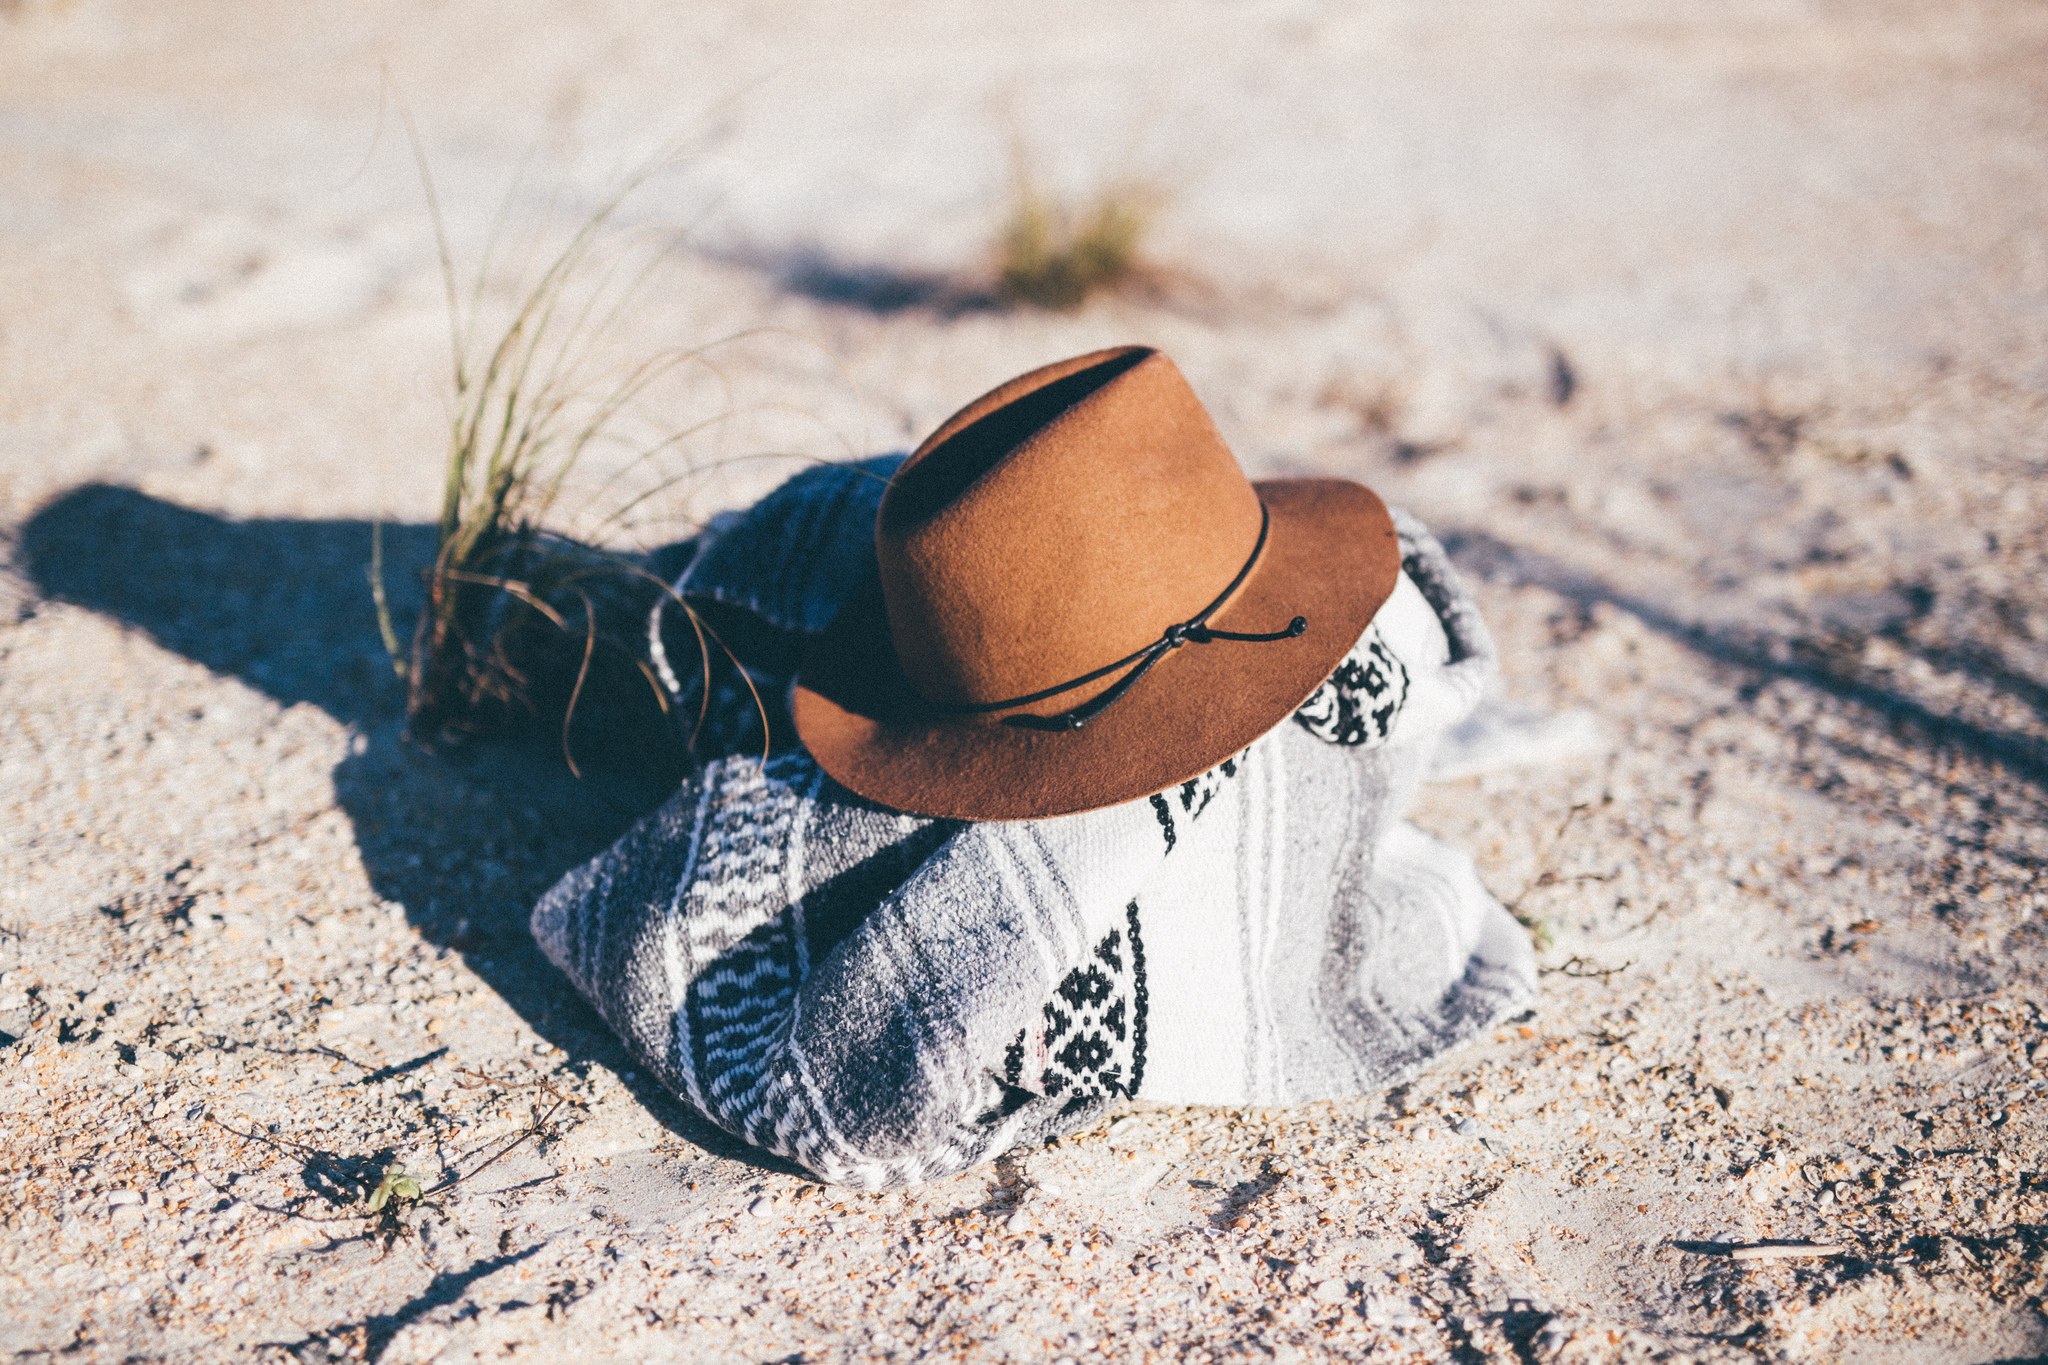 Шляпа на пляже. Шляпа. Шляпа на песке. Шляпа на море. Девушка в шляпе на пляже.